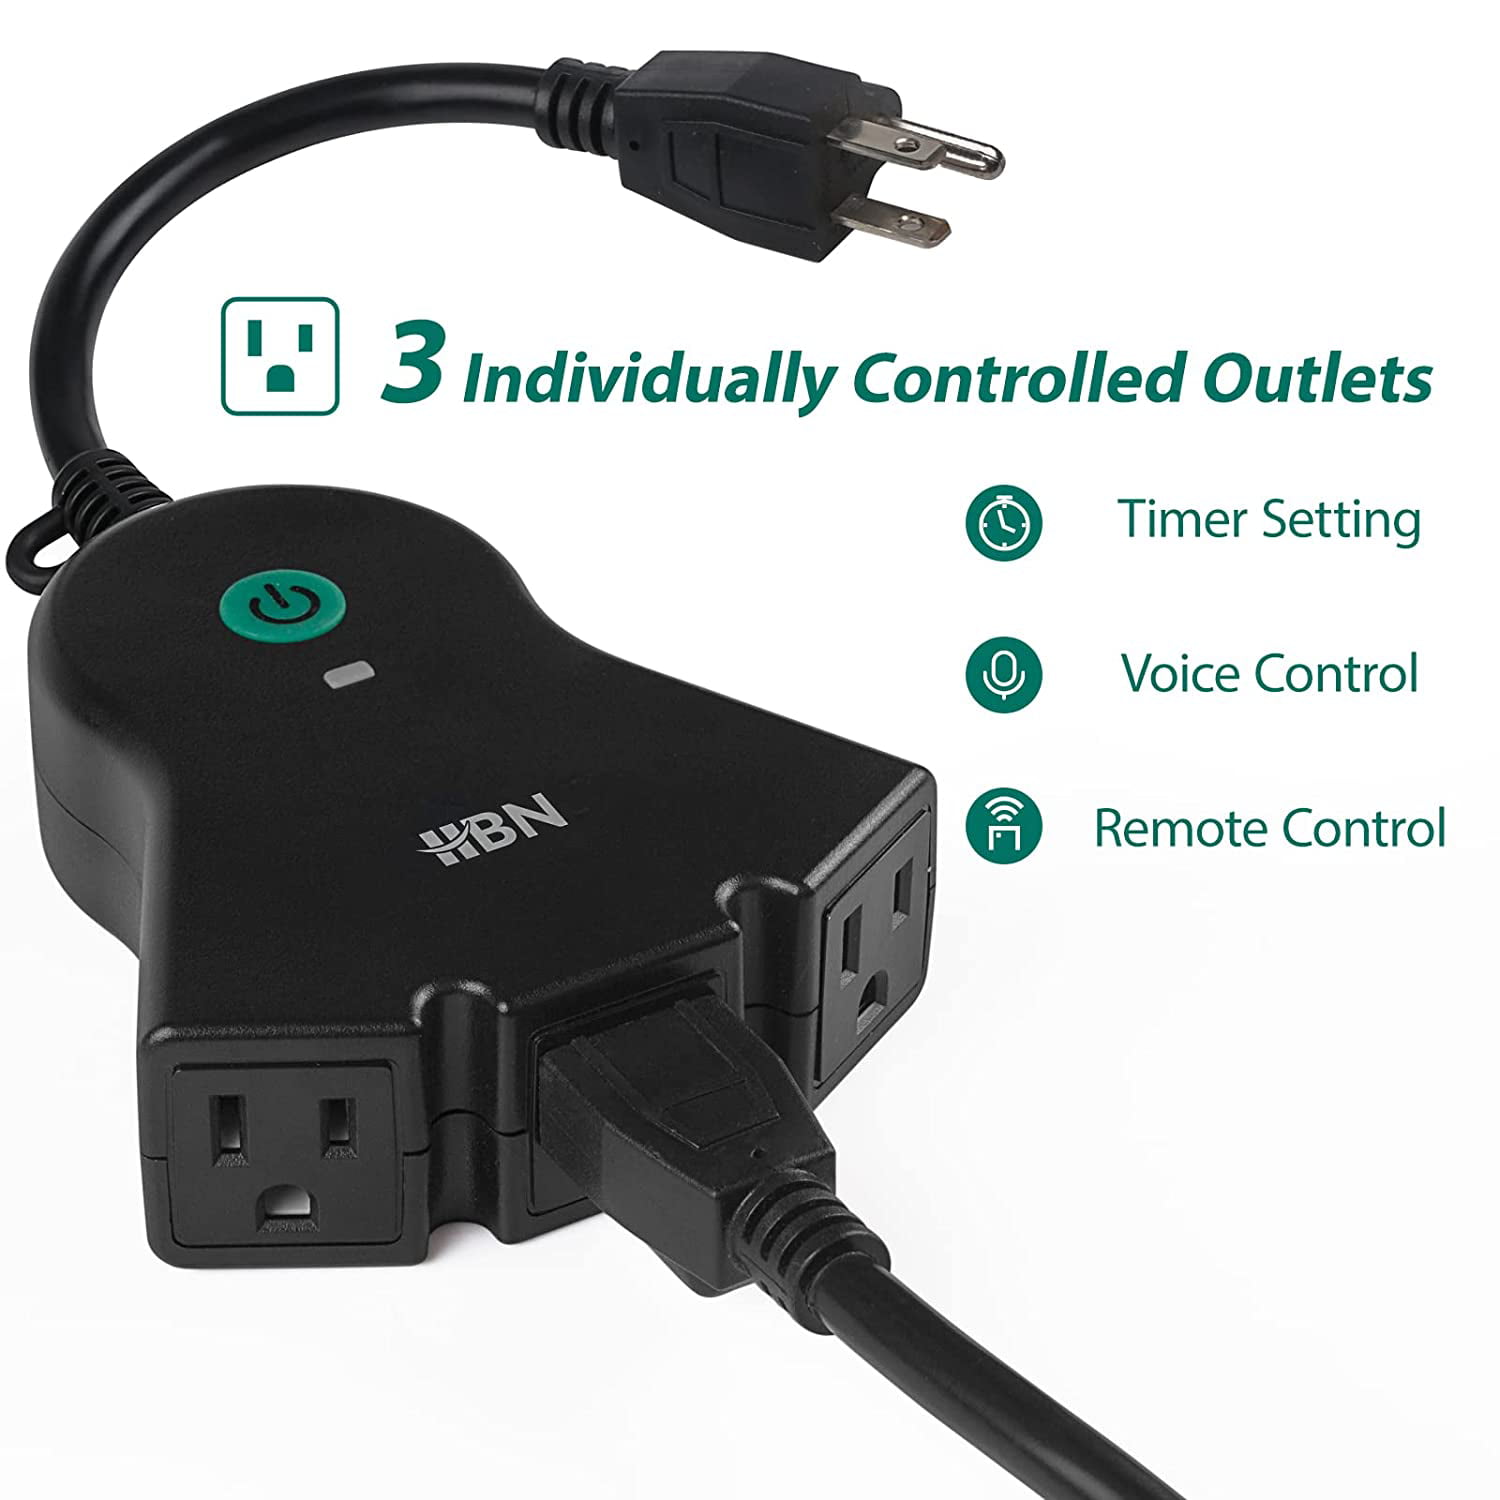 HBN Smart Plug Mini 15A, WiFi Smart Outlet Works with Alexa